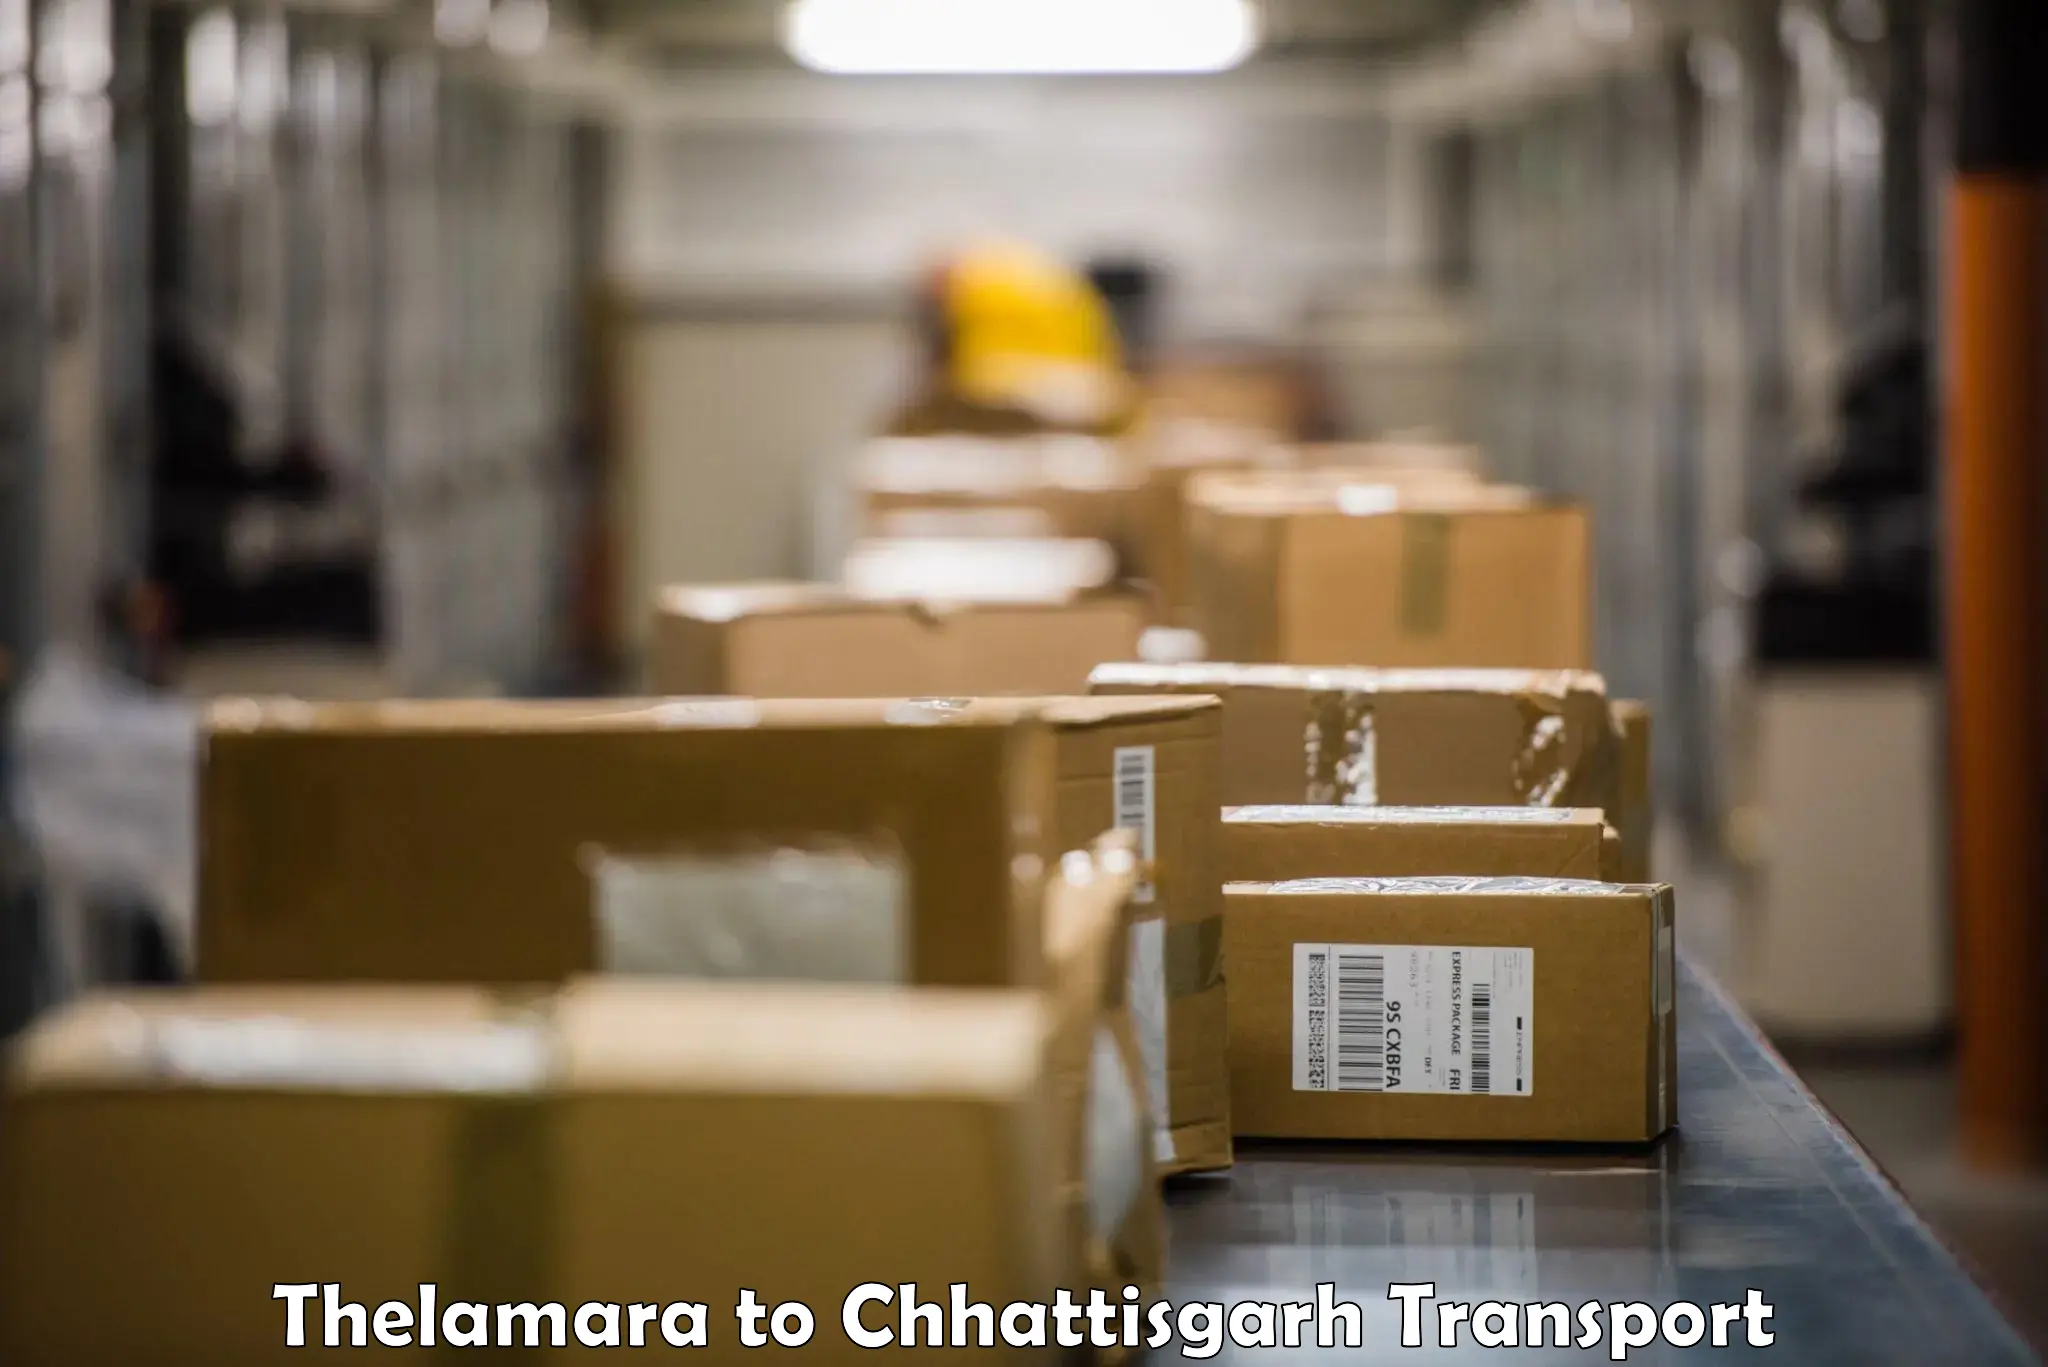 Truck transport companies in India in Thelamara to Patna Chhattisgarh